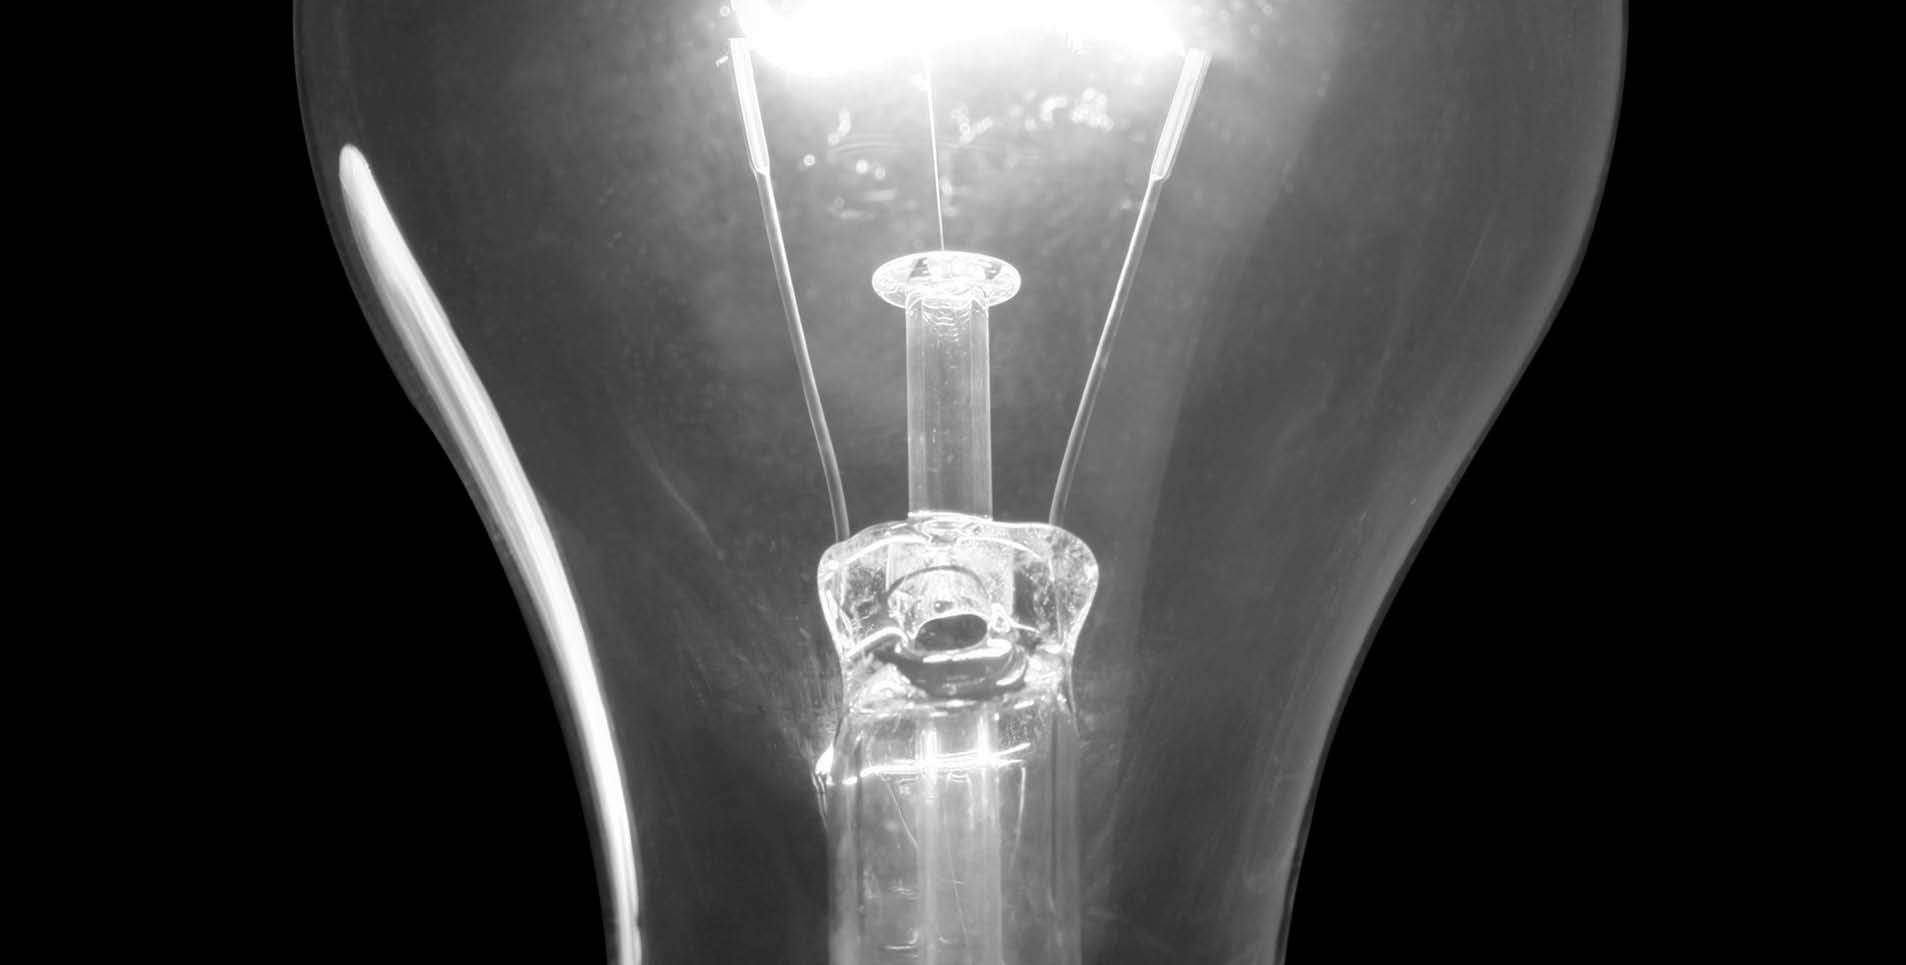 Lightbulb filament